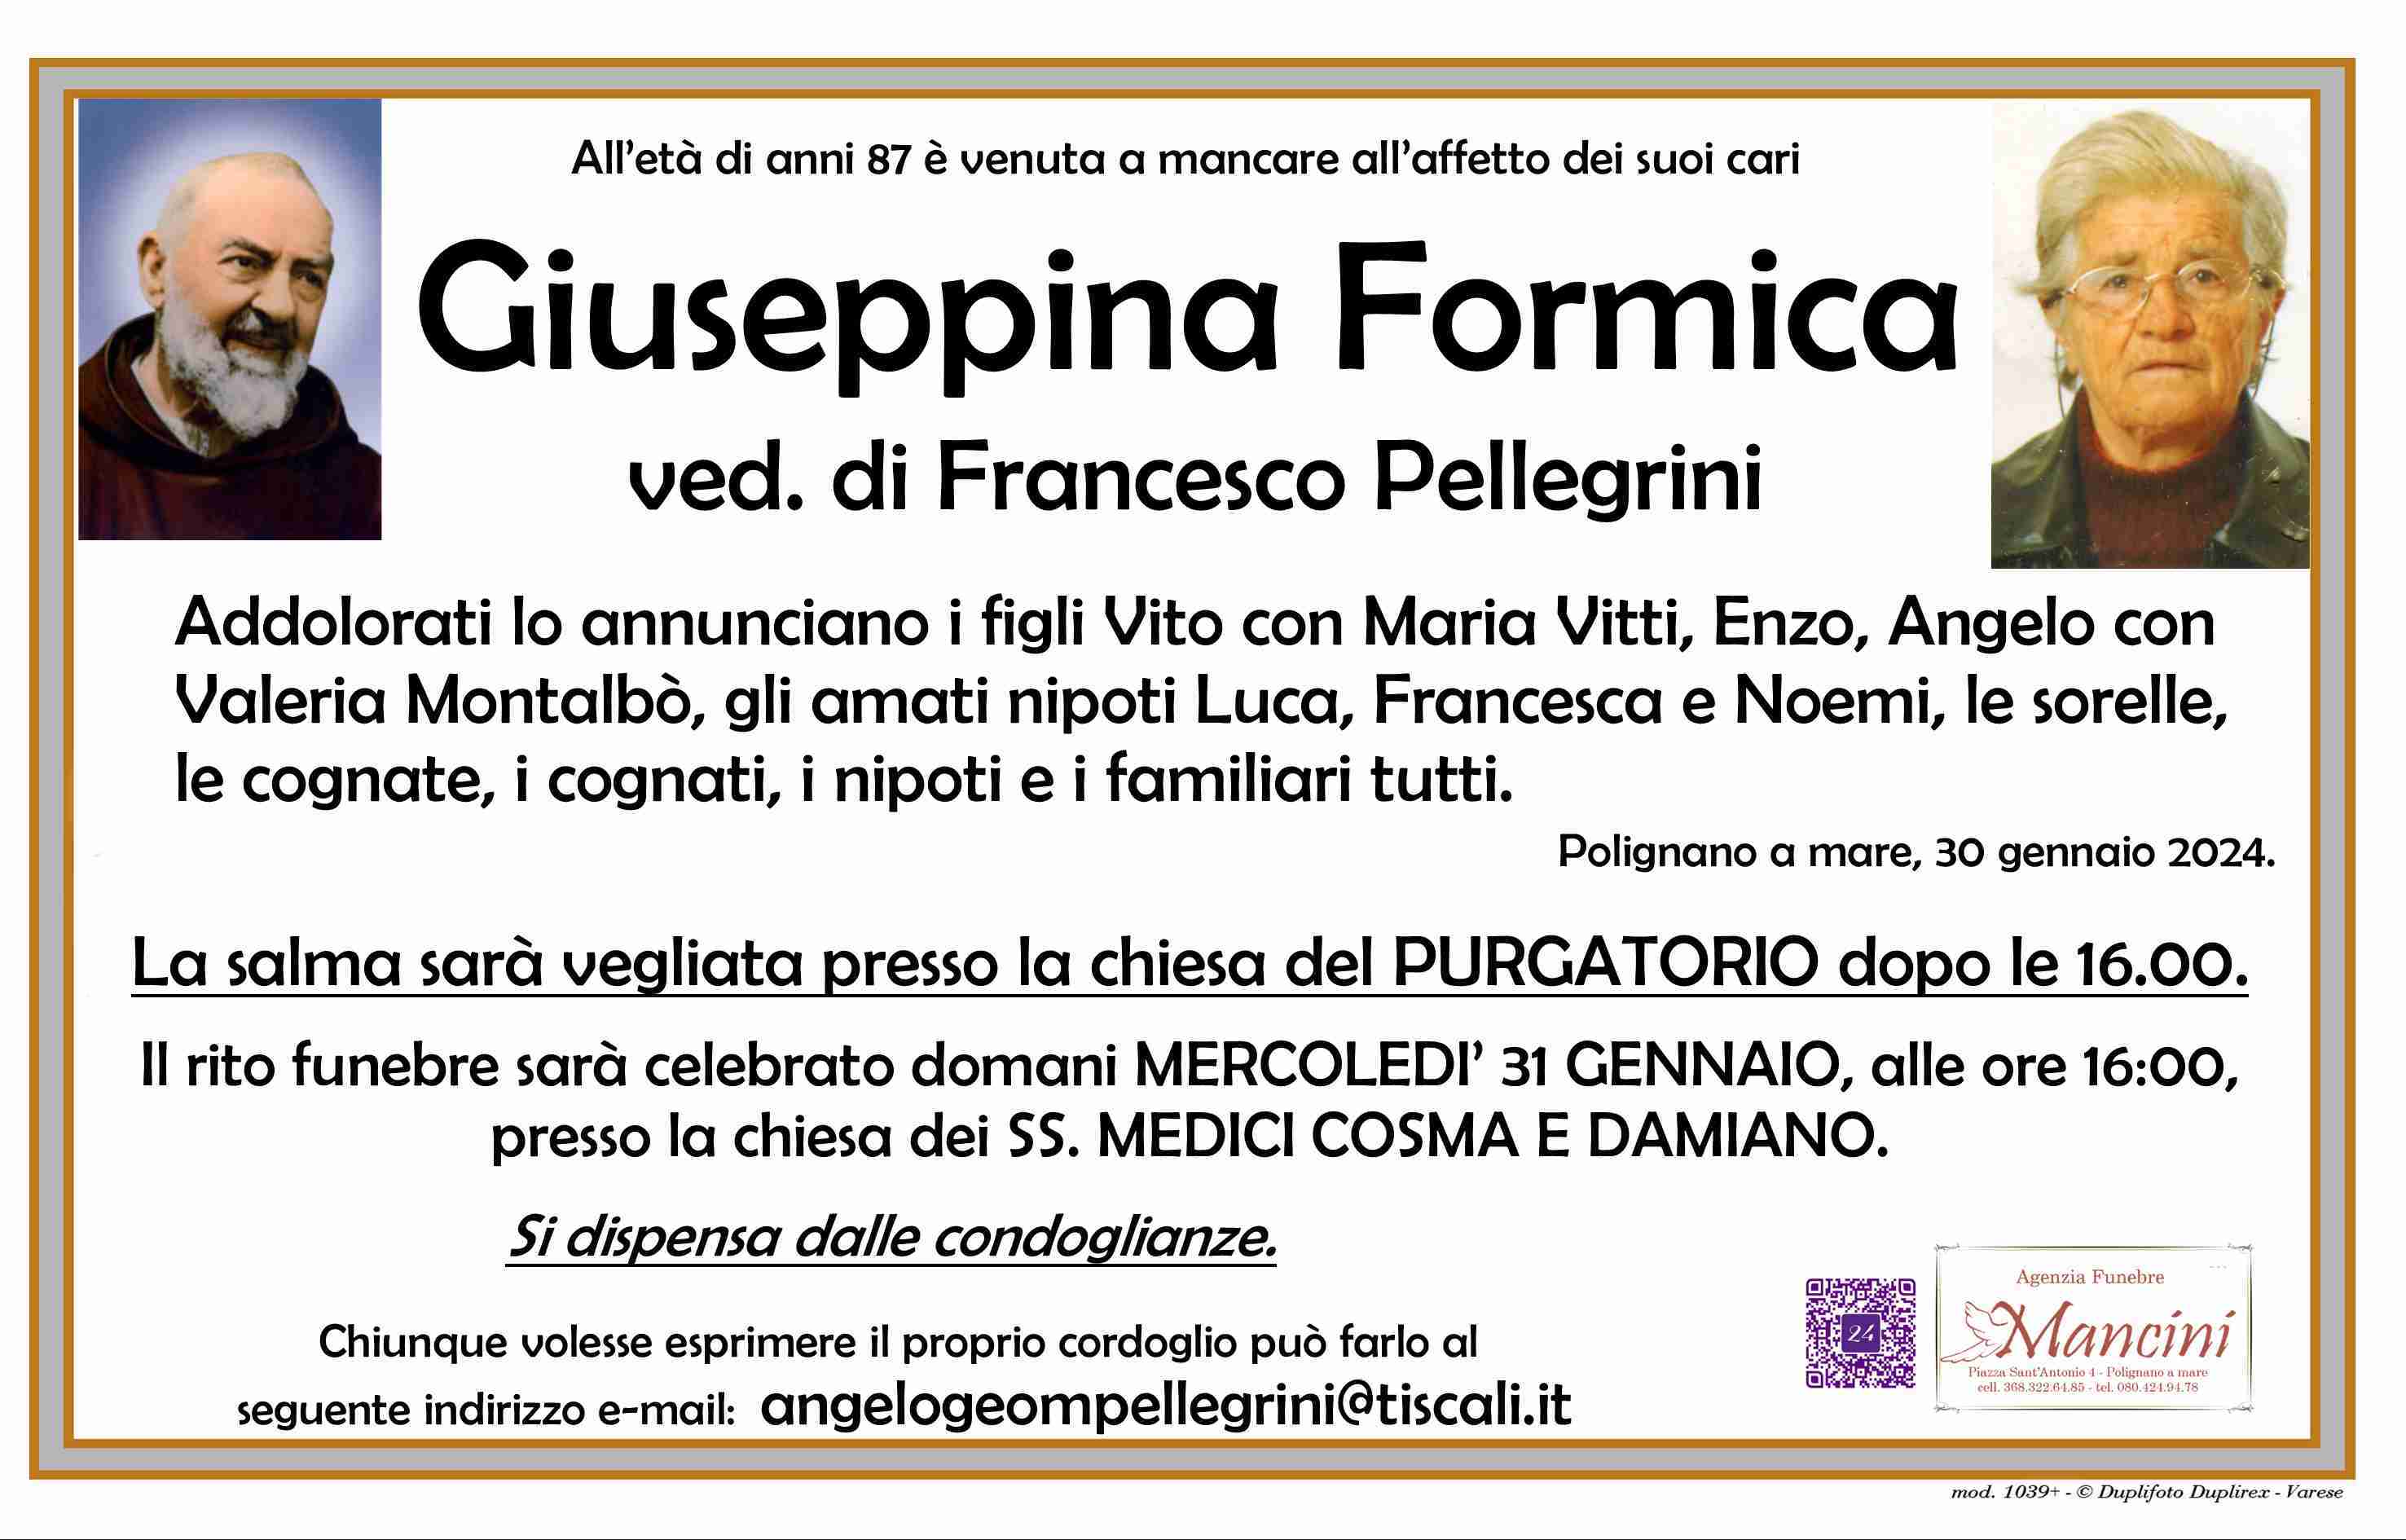 Giuseppina Formica